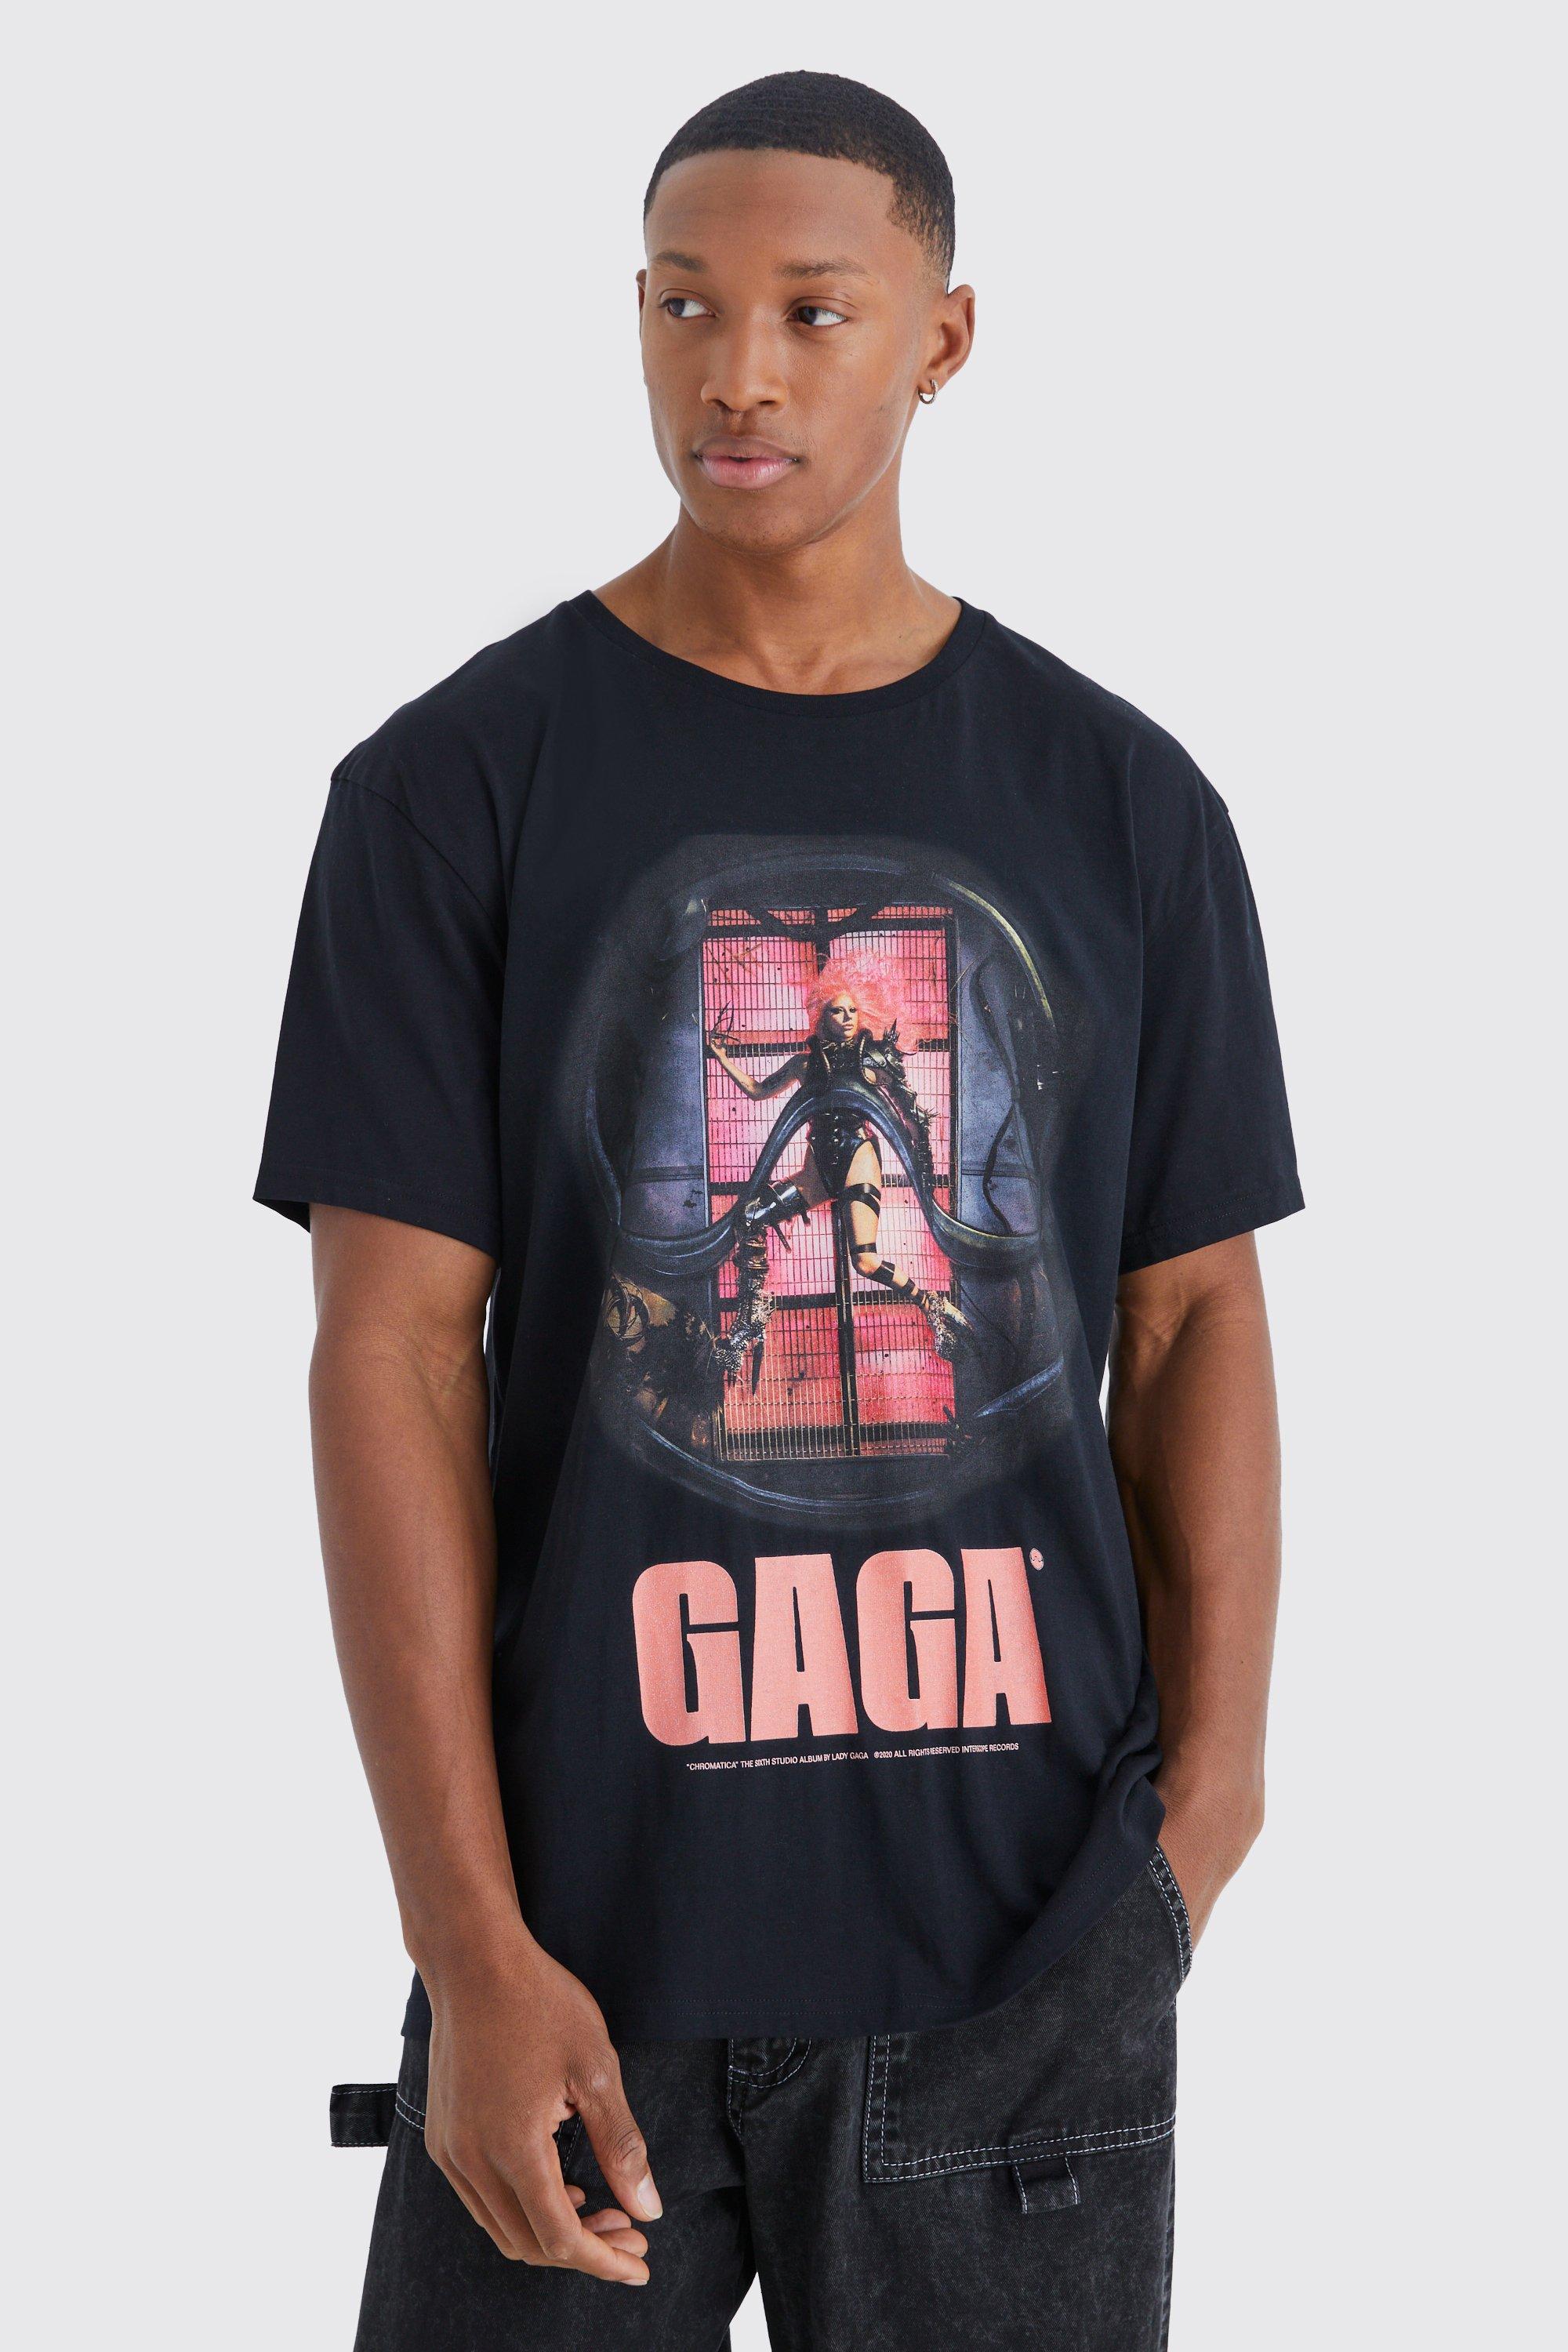 womens oversized lady gaga license t-shirt - black - s, black